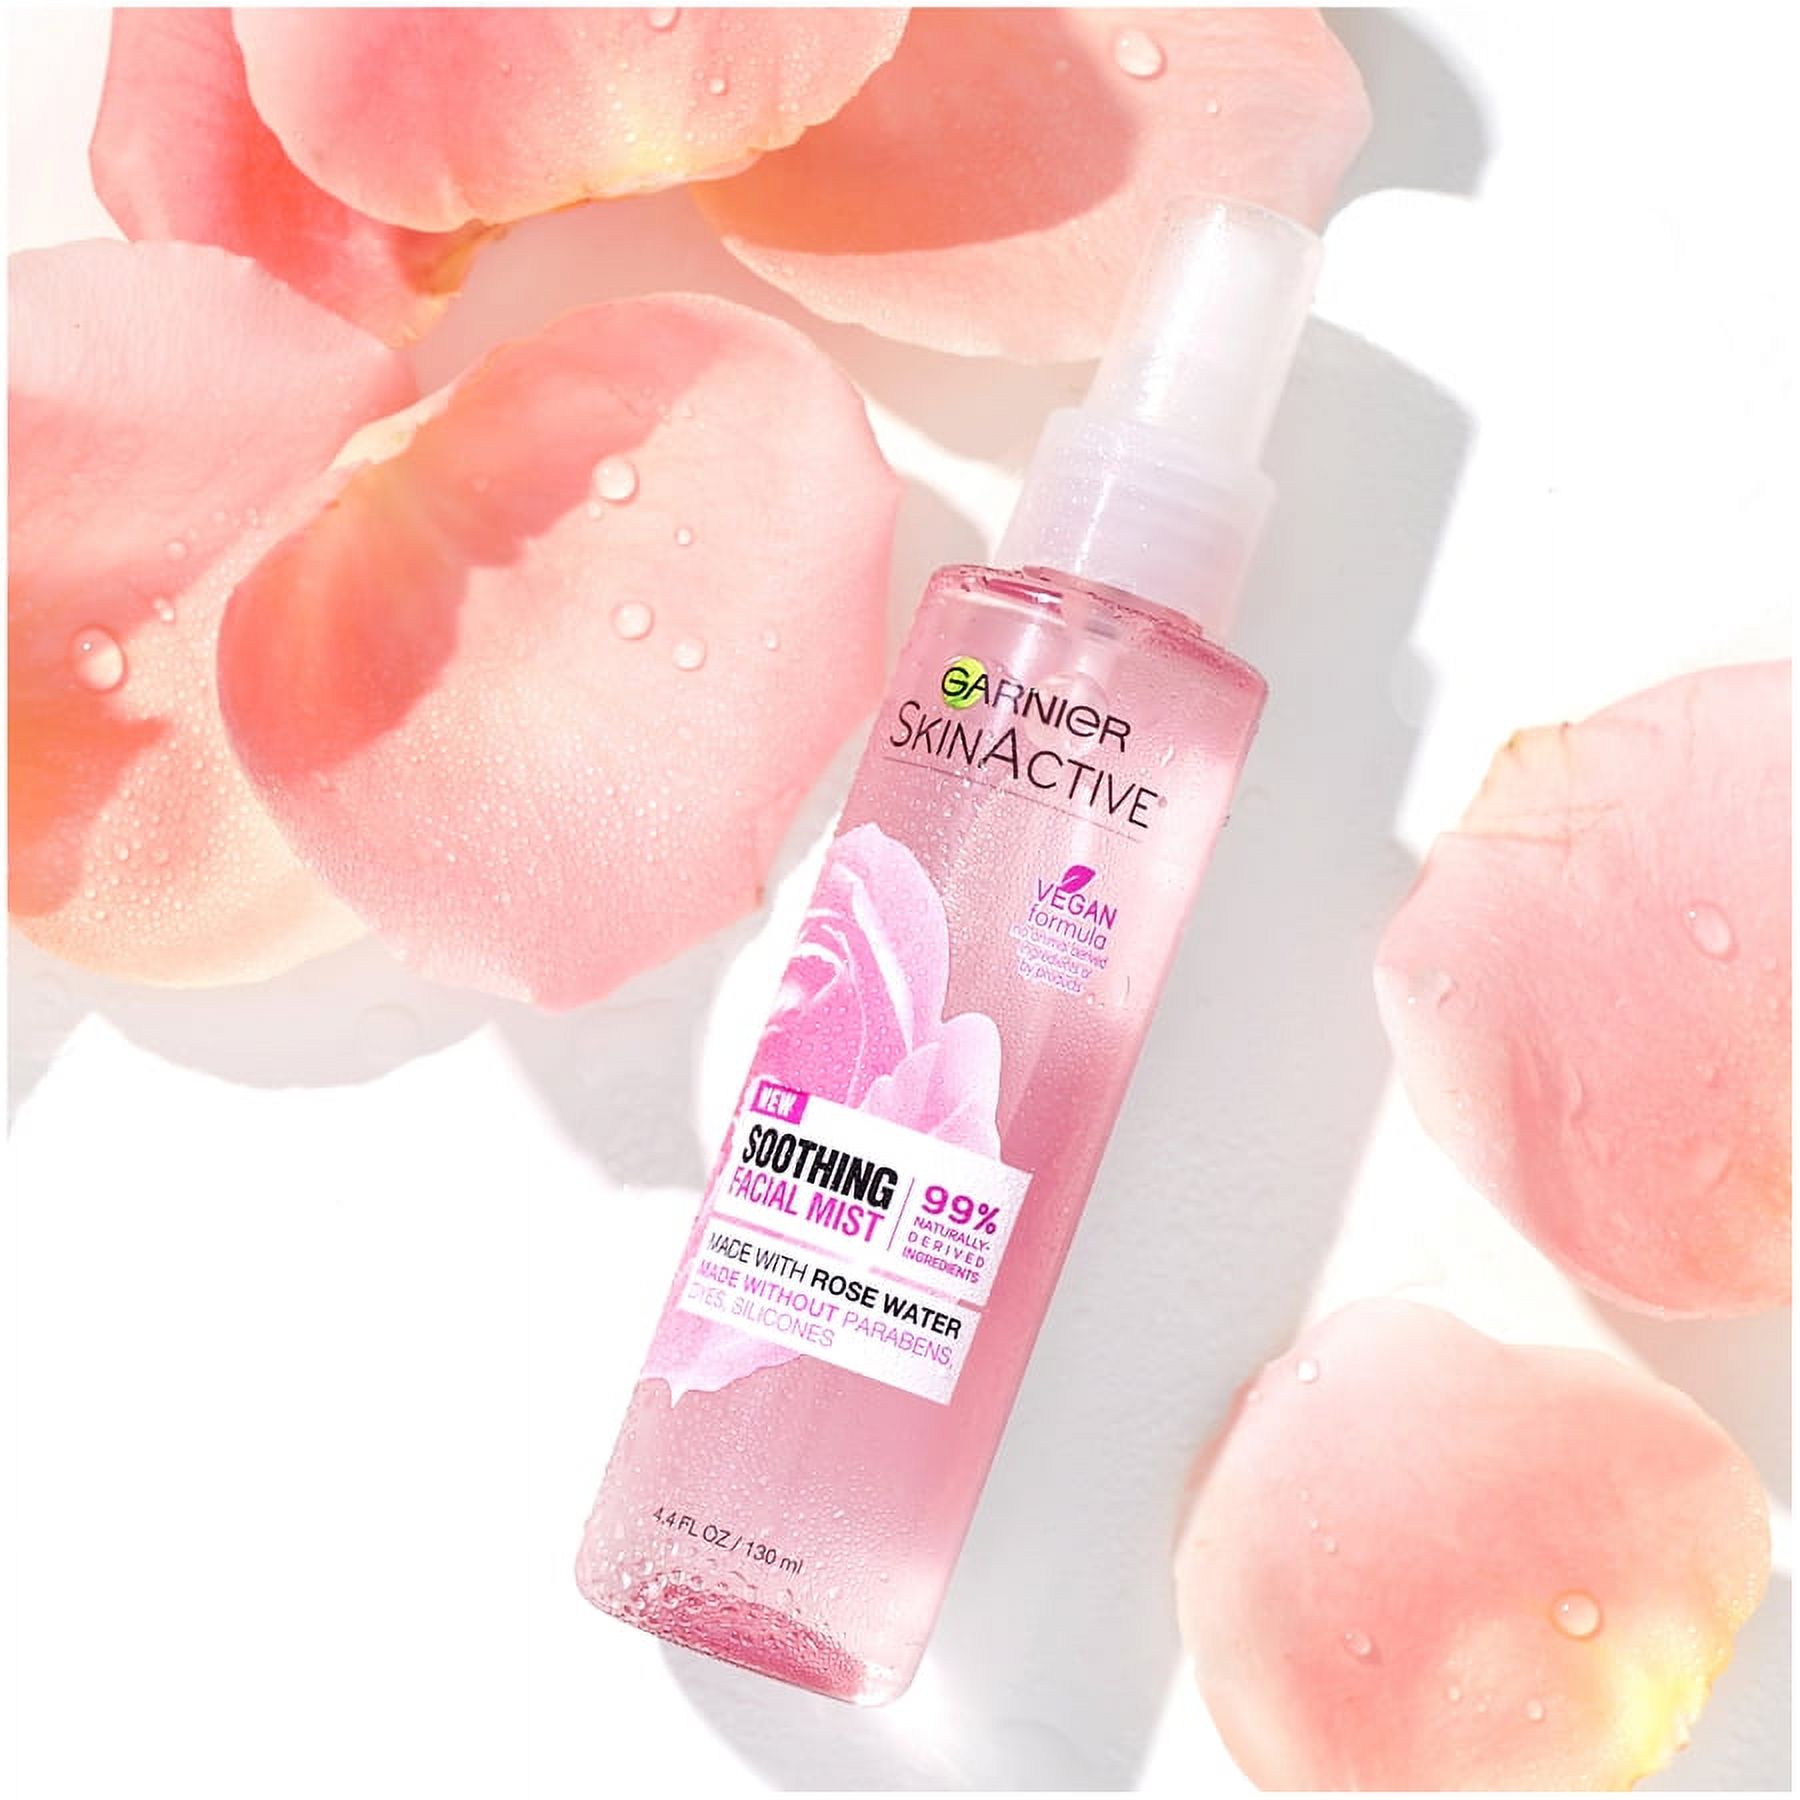 Garnier SkinActive Facial Mist Spray, Rose Water, 4.4 fl oz - image 5 of 11